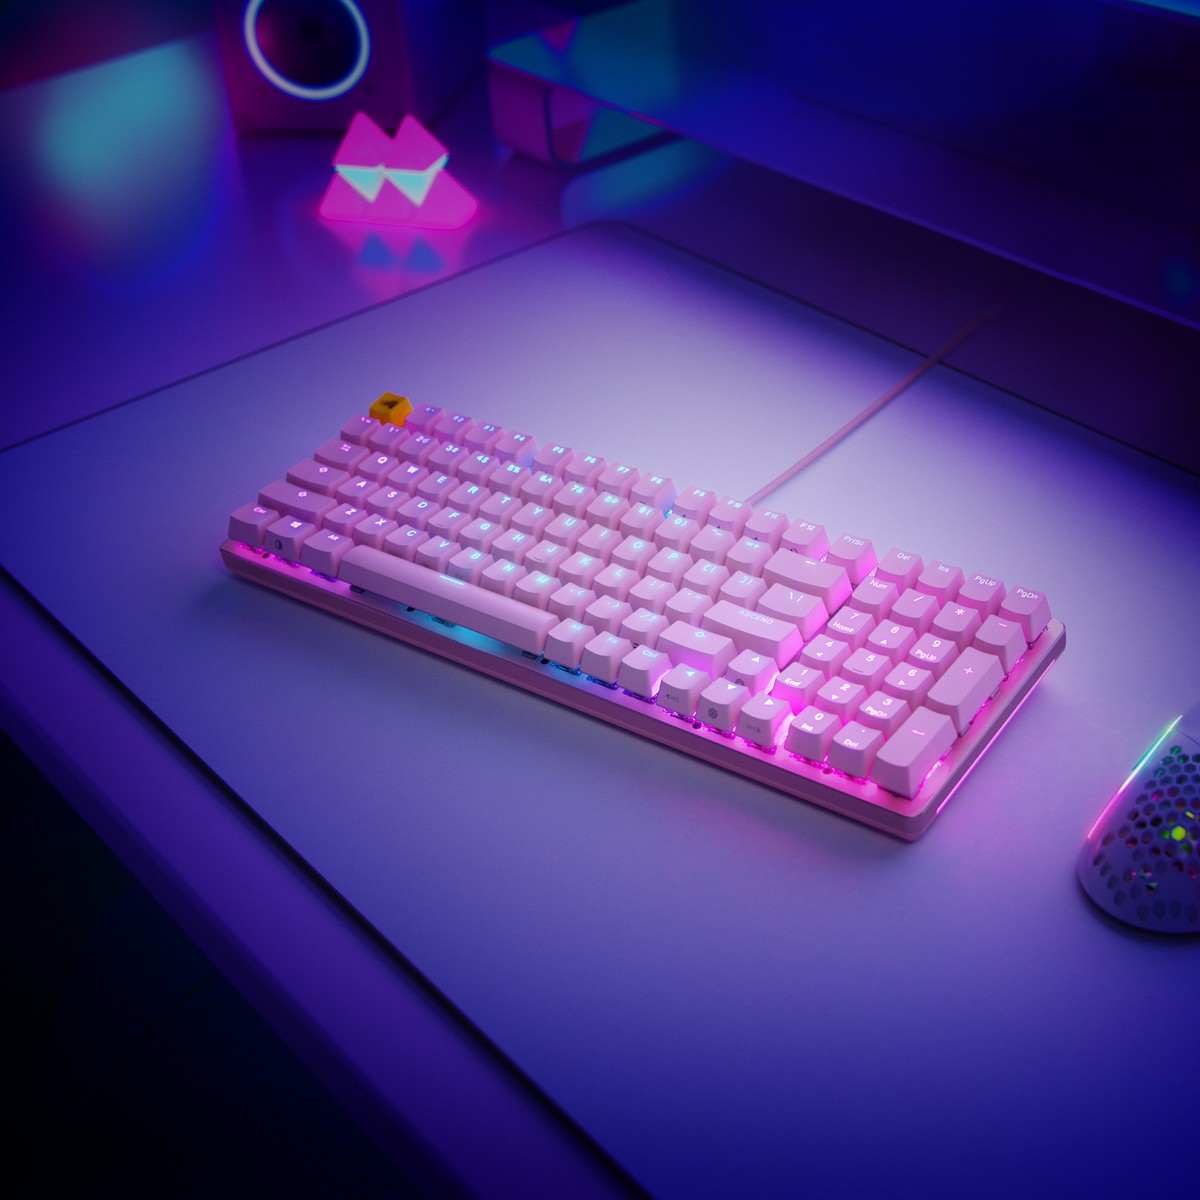 Glorious - Glorious GMMK 2 96% RGB USB Mechanical Gaming Keyboard UK ISO - Pink (GLO-GMMK2-96-FOX-ISO-P-UK)